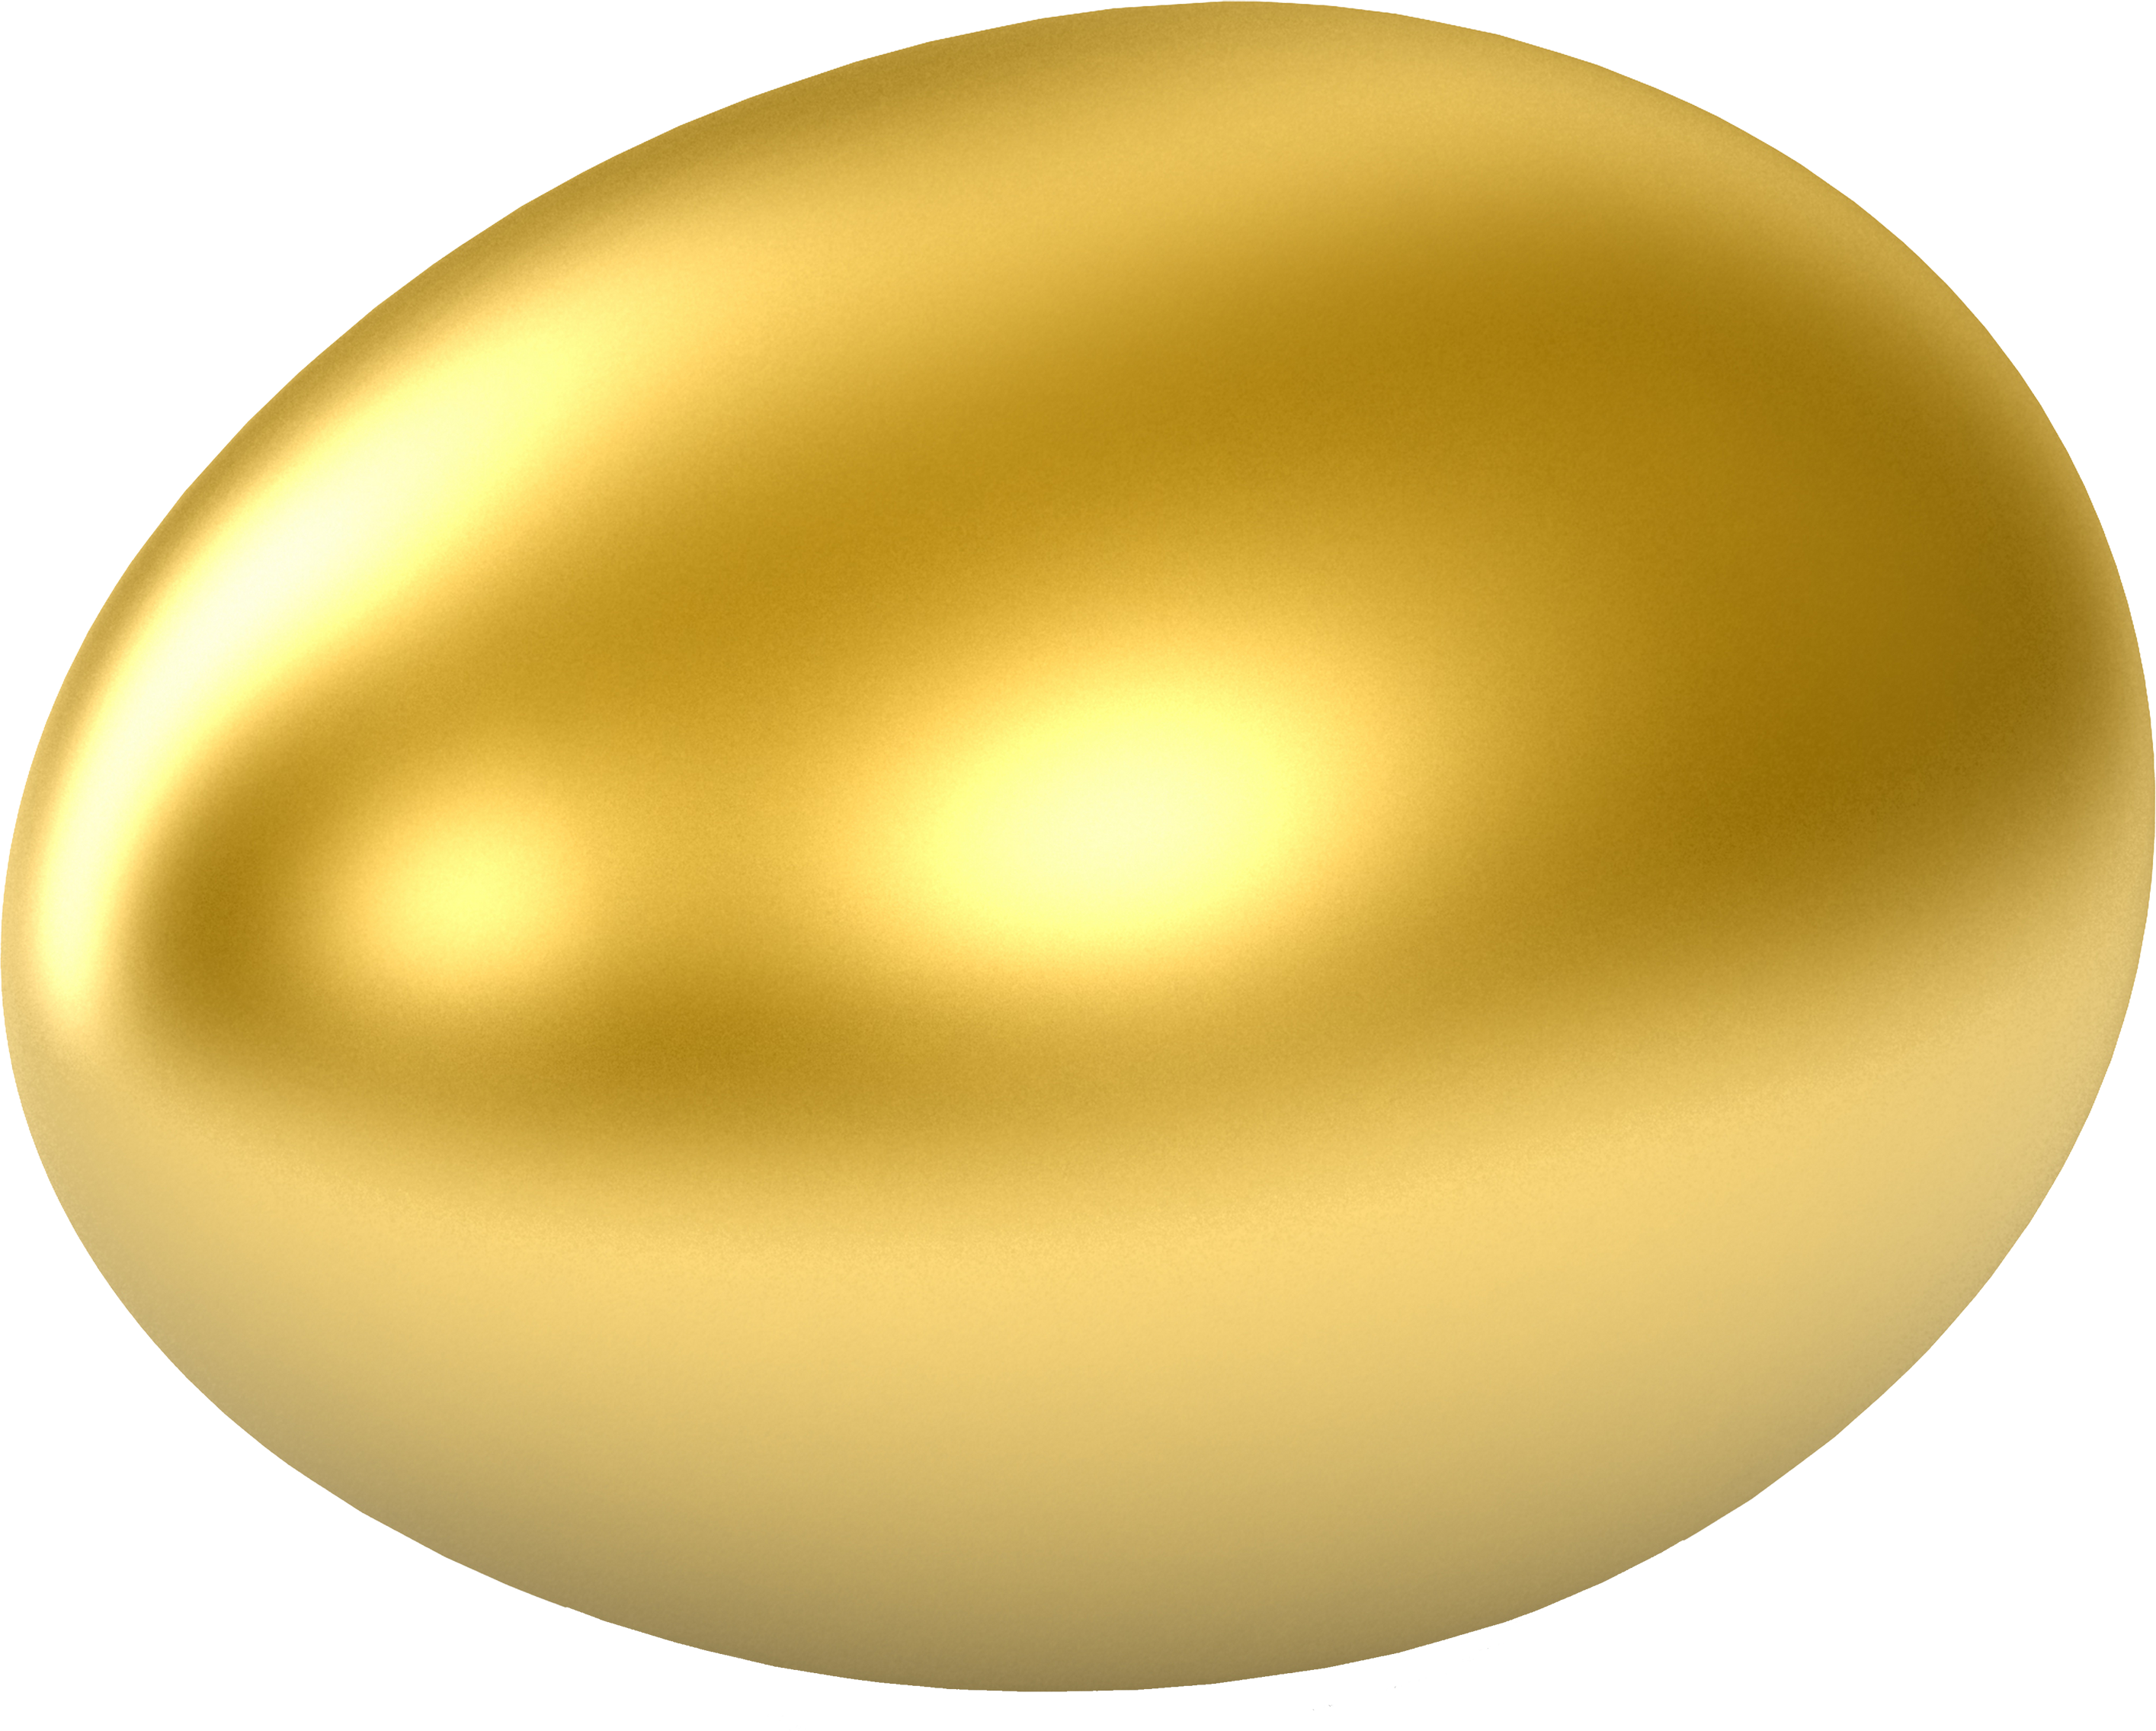 Eggs Gallery 